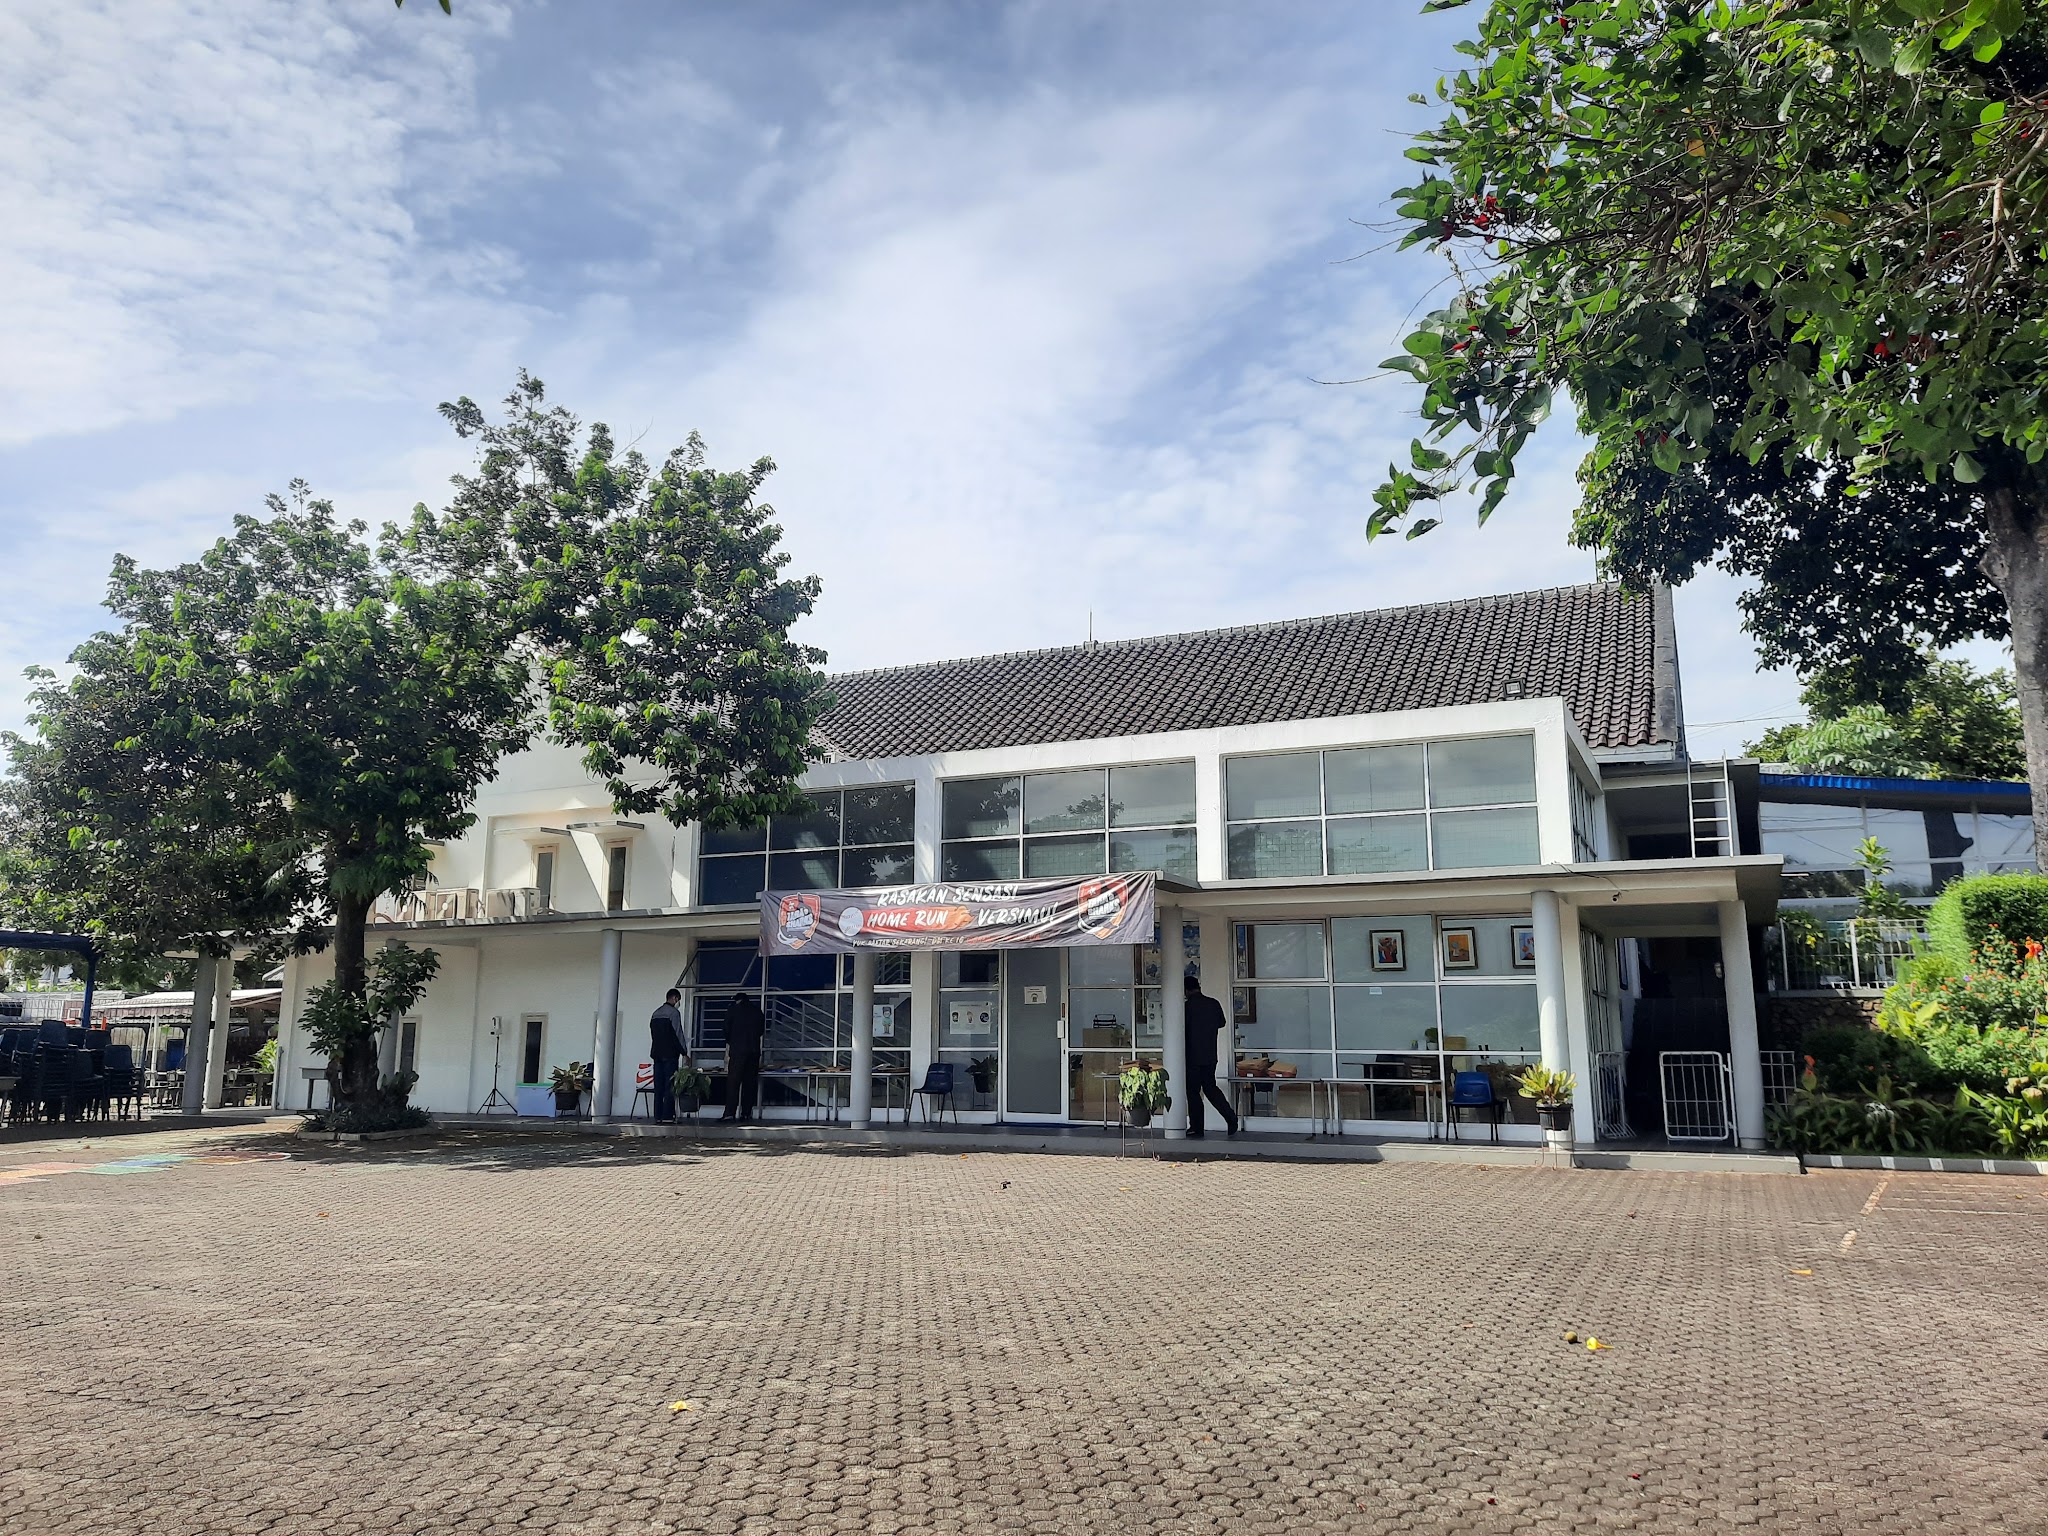 Foto SMP  Tara Salvia, Kota Tangerang Selatan